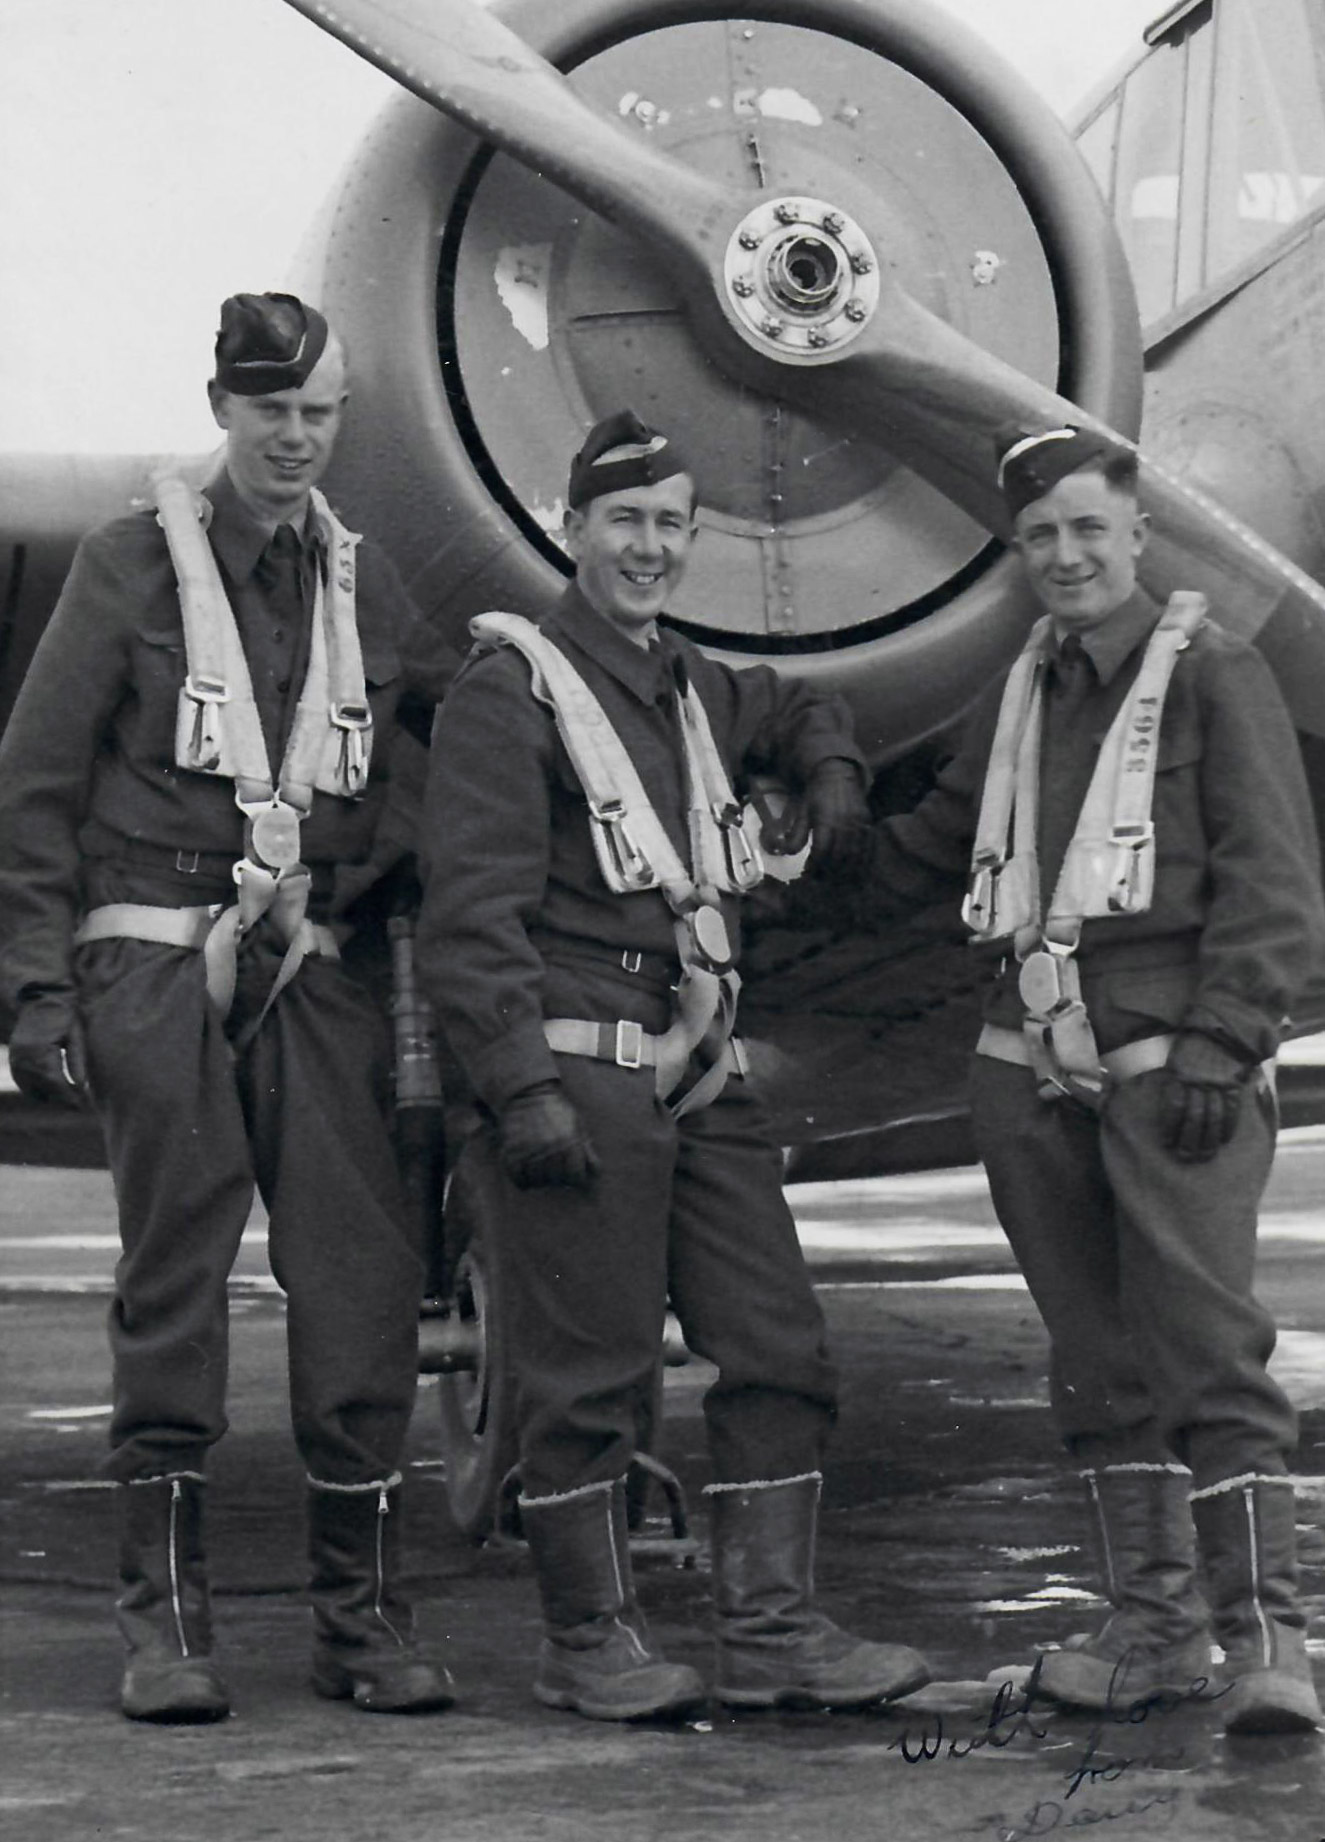 three men in uniform in front of airplane